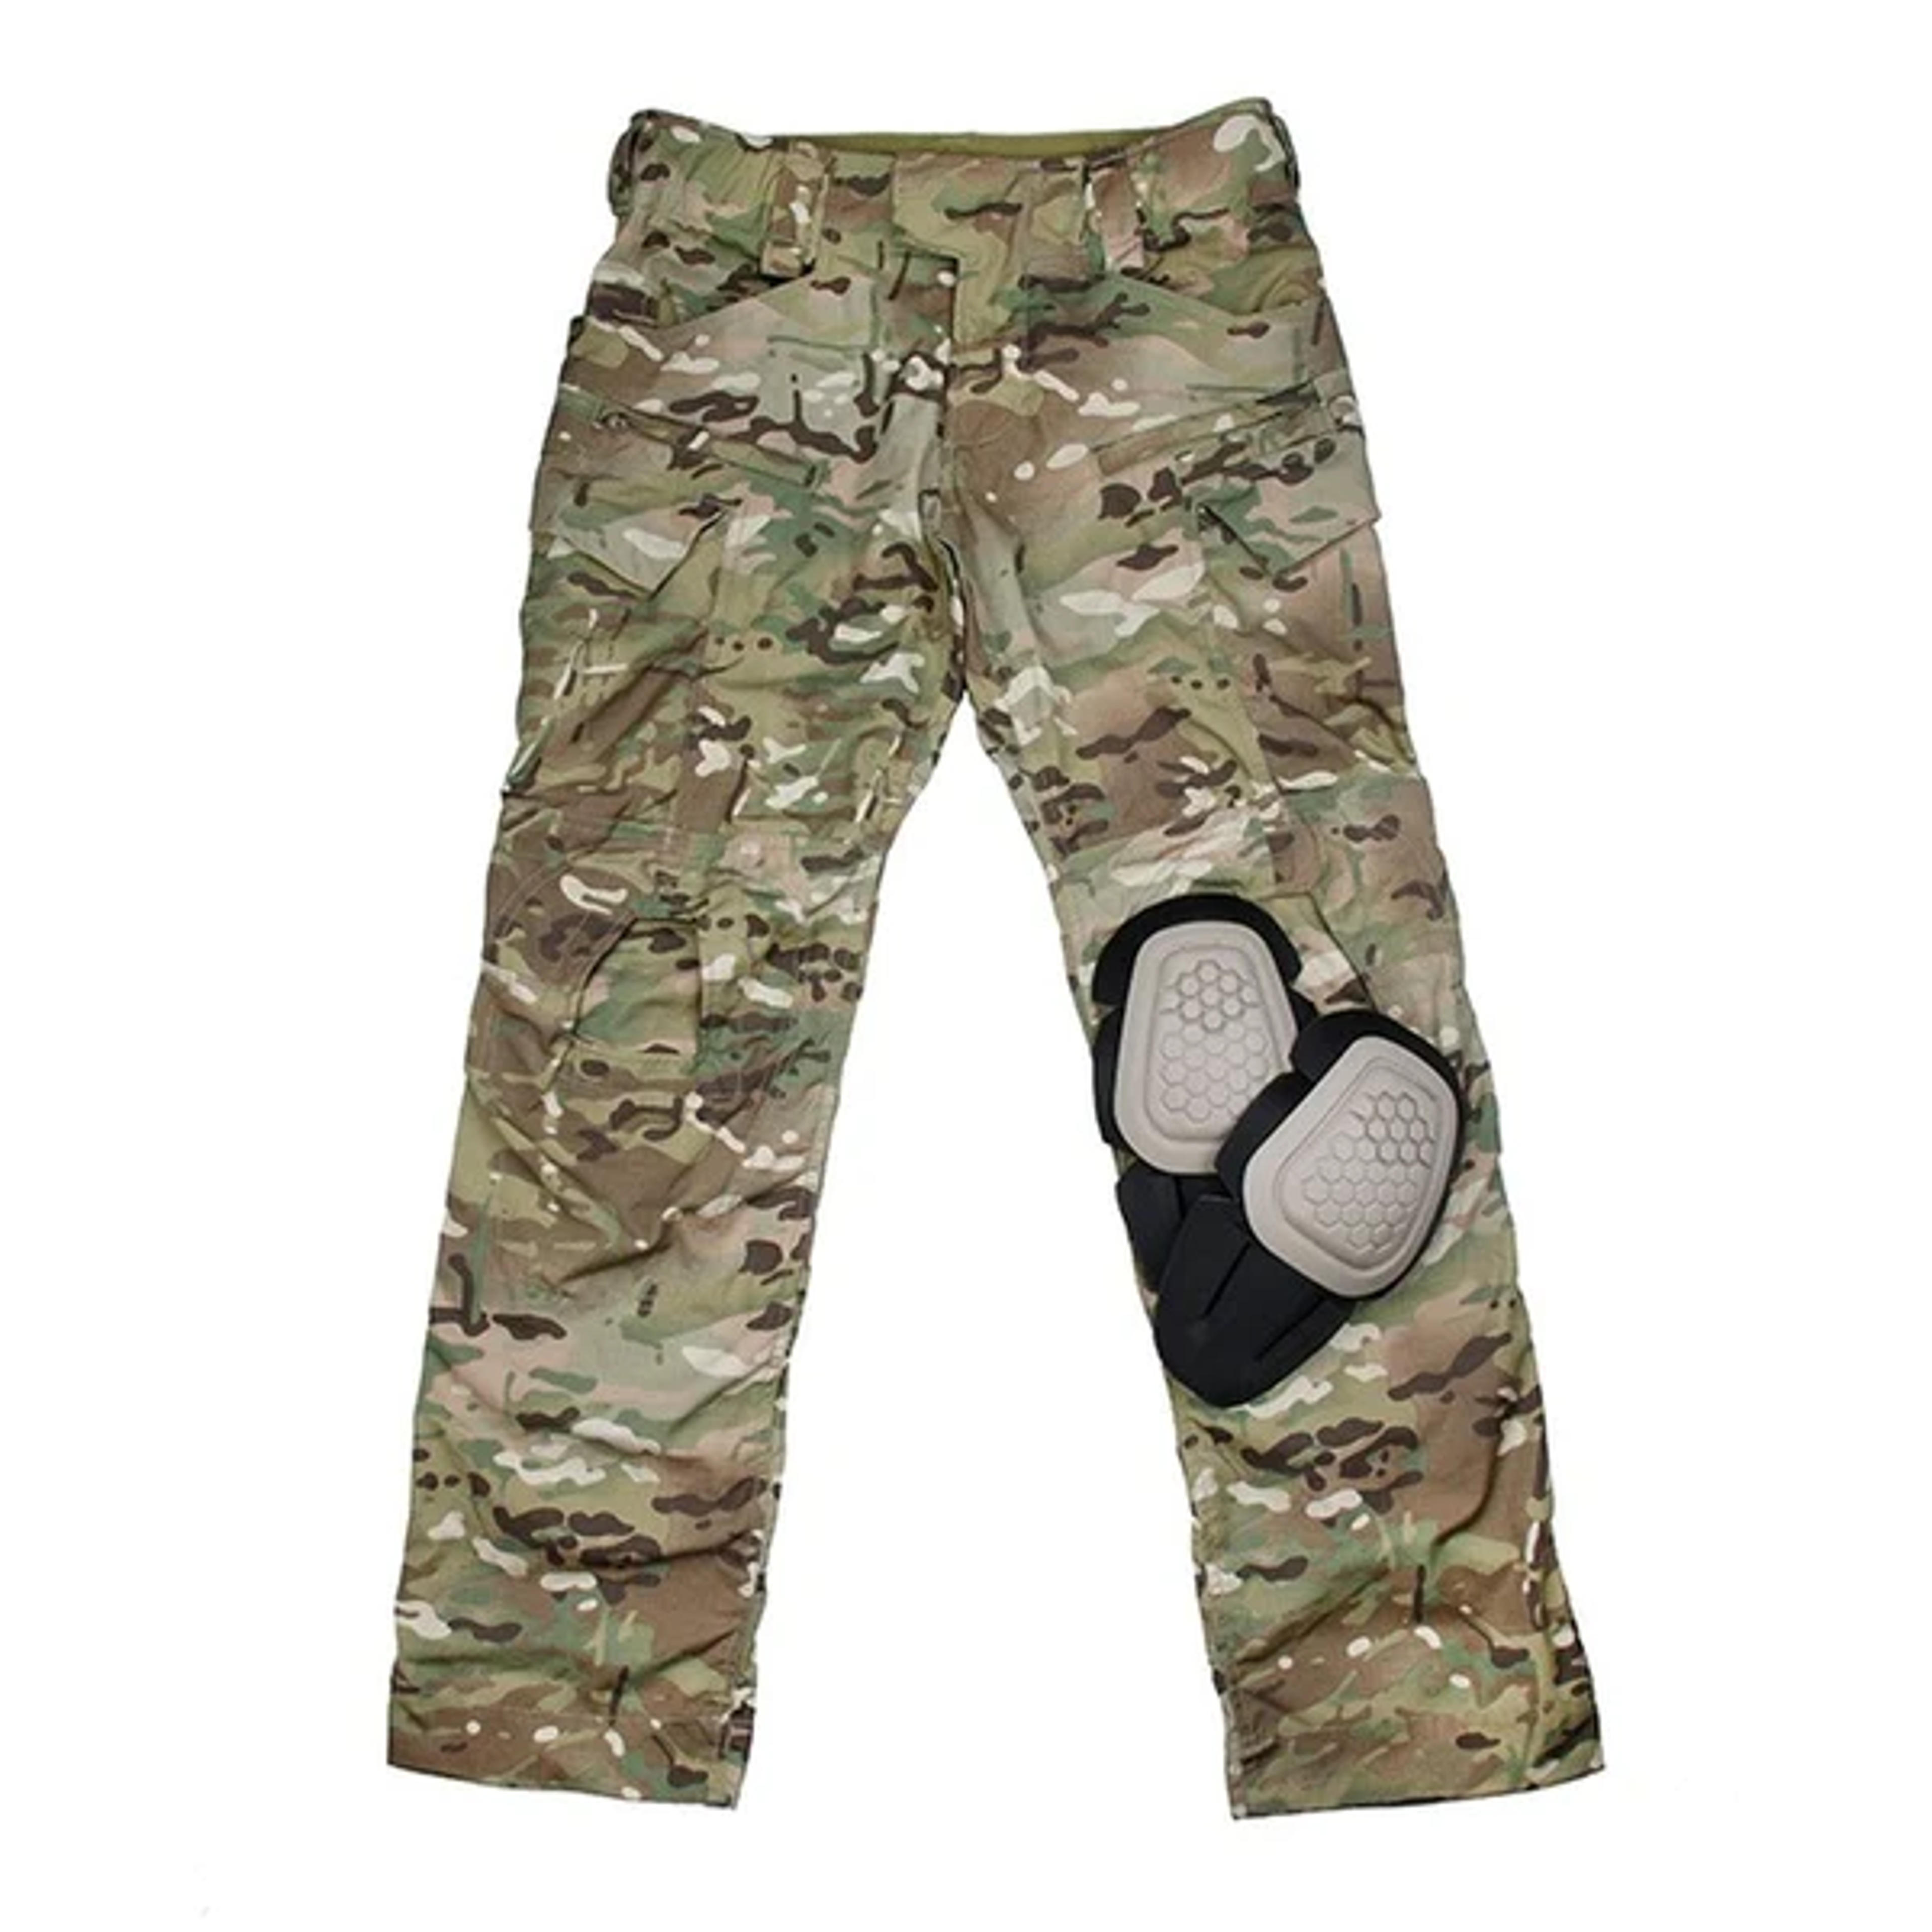 TMC New G4 Tactical Training Pants Multicam Camouflage Pants